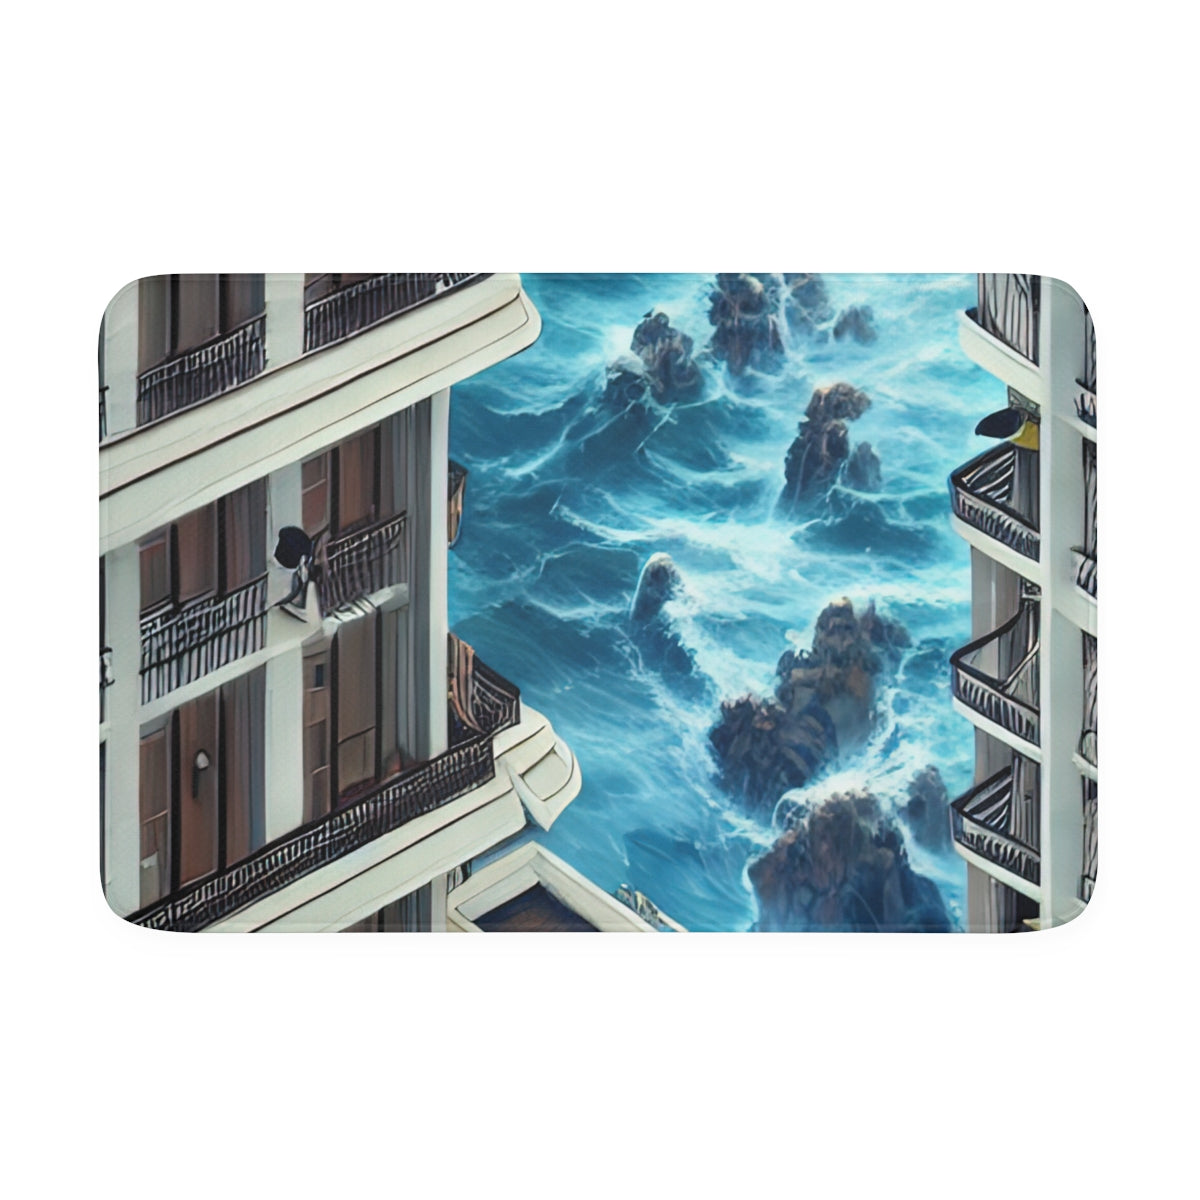 Memory Foam Bath Mat | Waves Crashing Into City